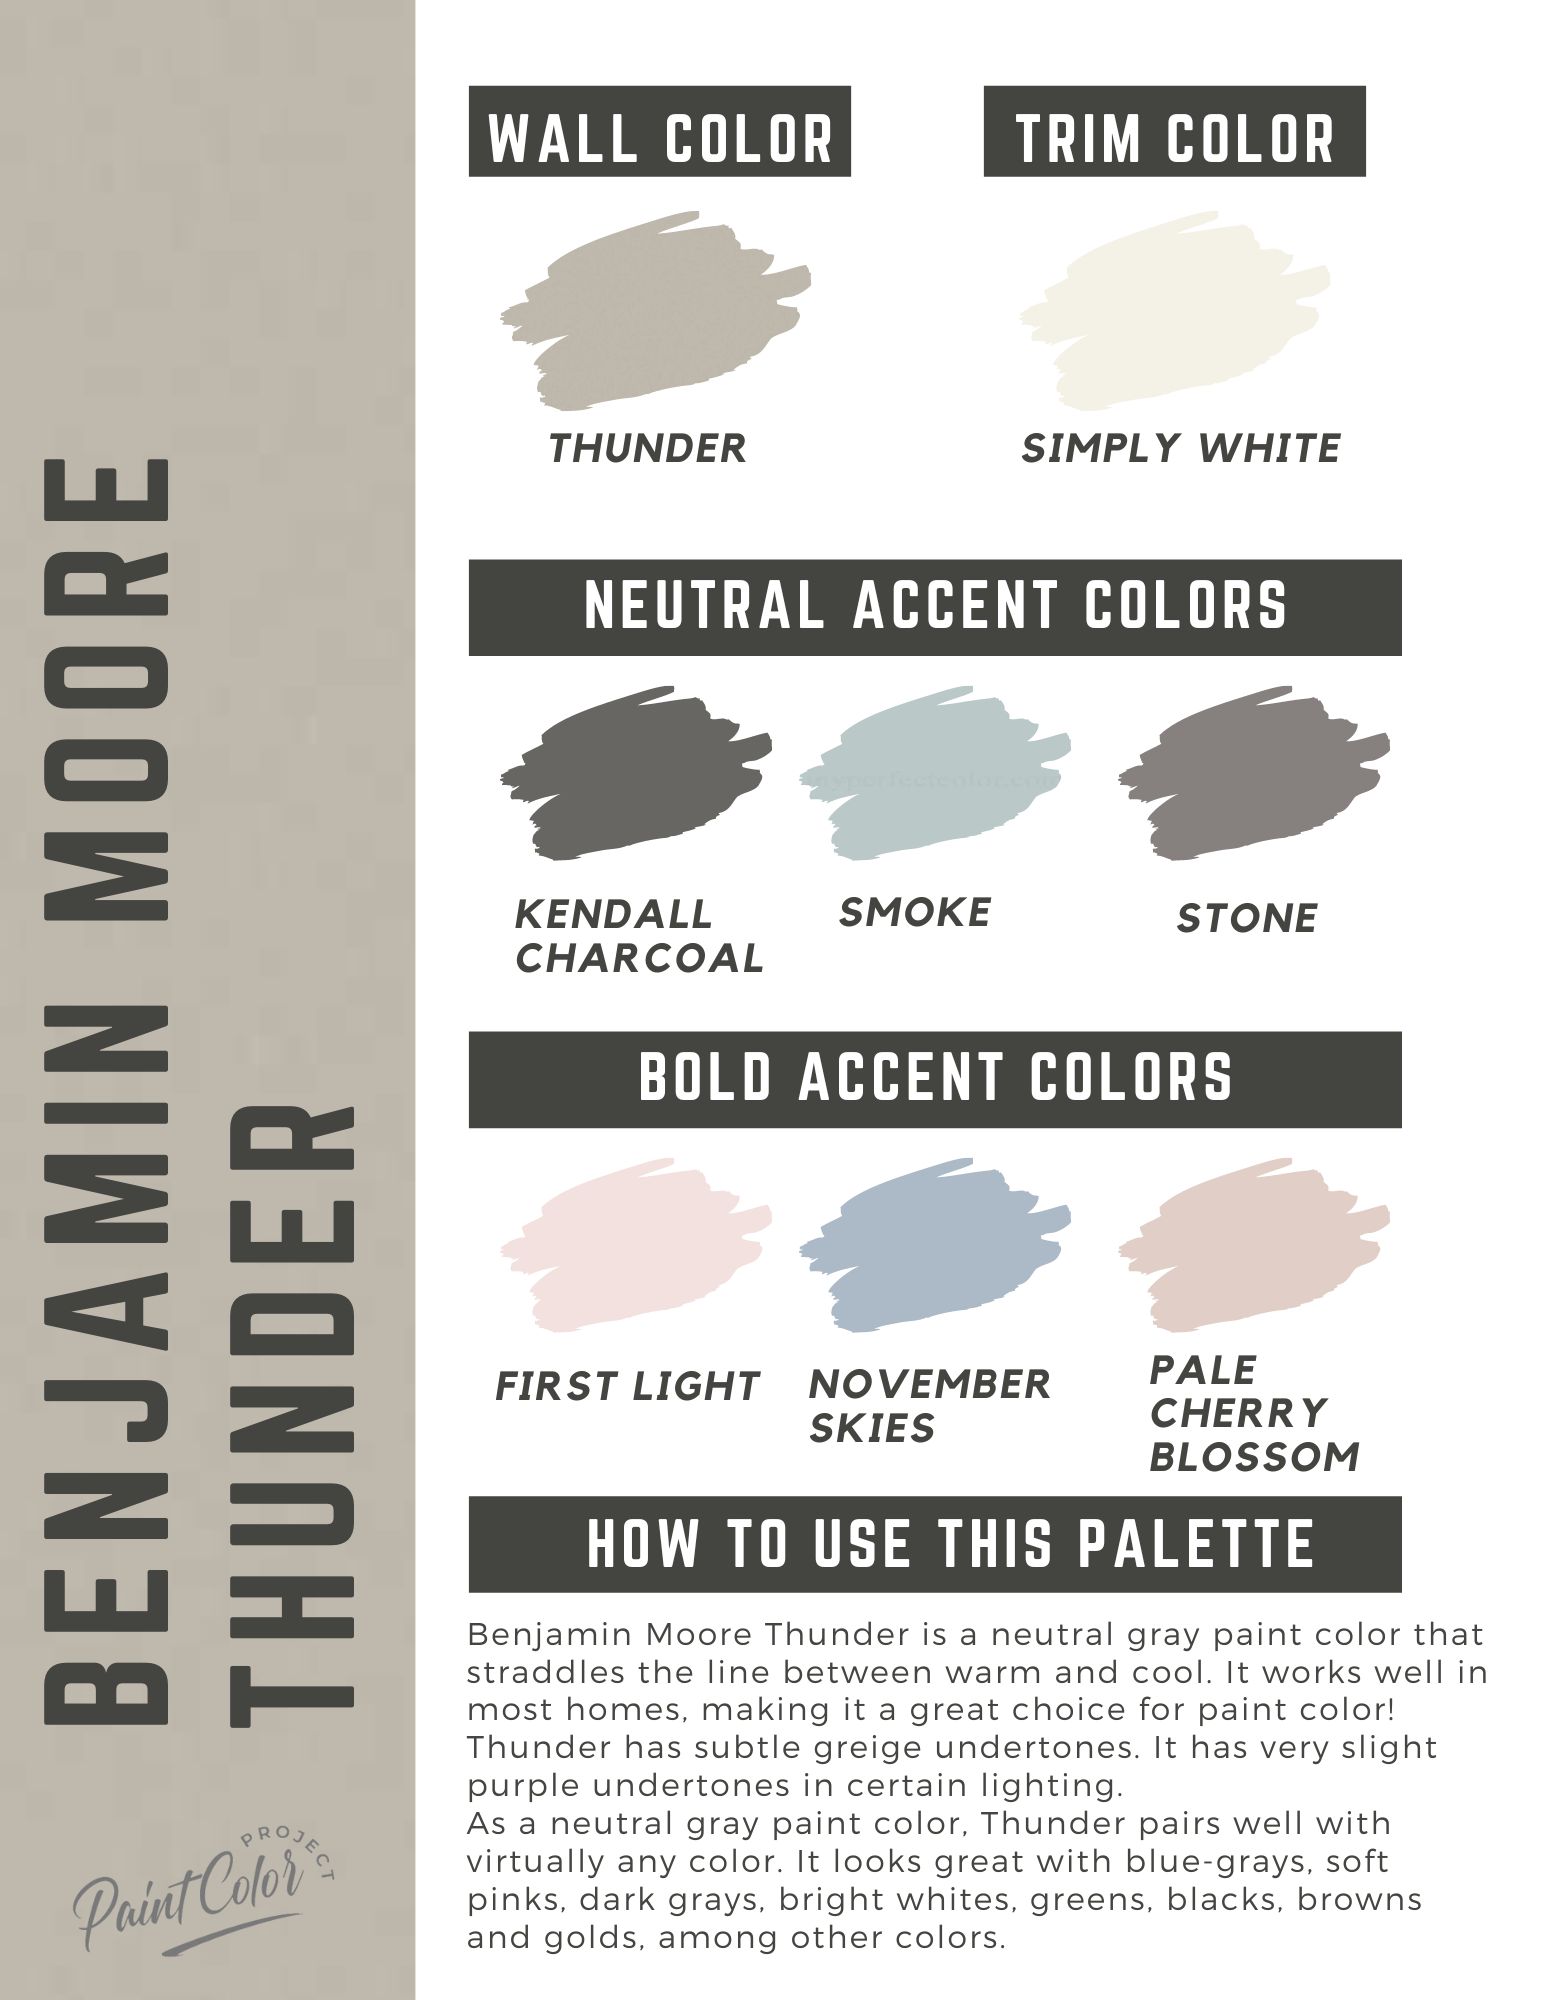 Benjamin Moore Thunder paint color palette